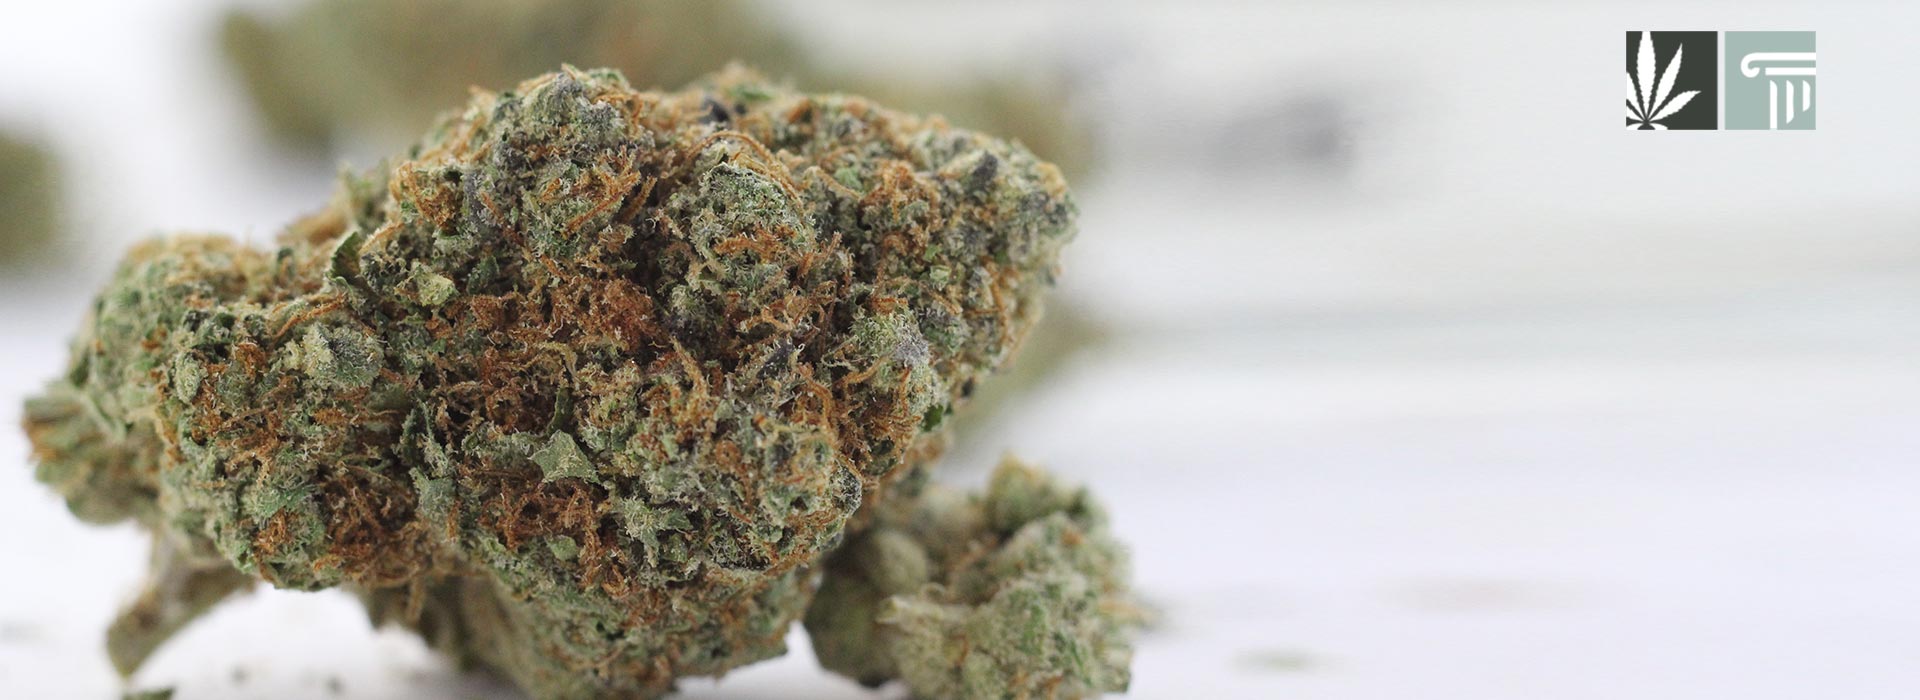 yland support marijuana legalization